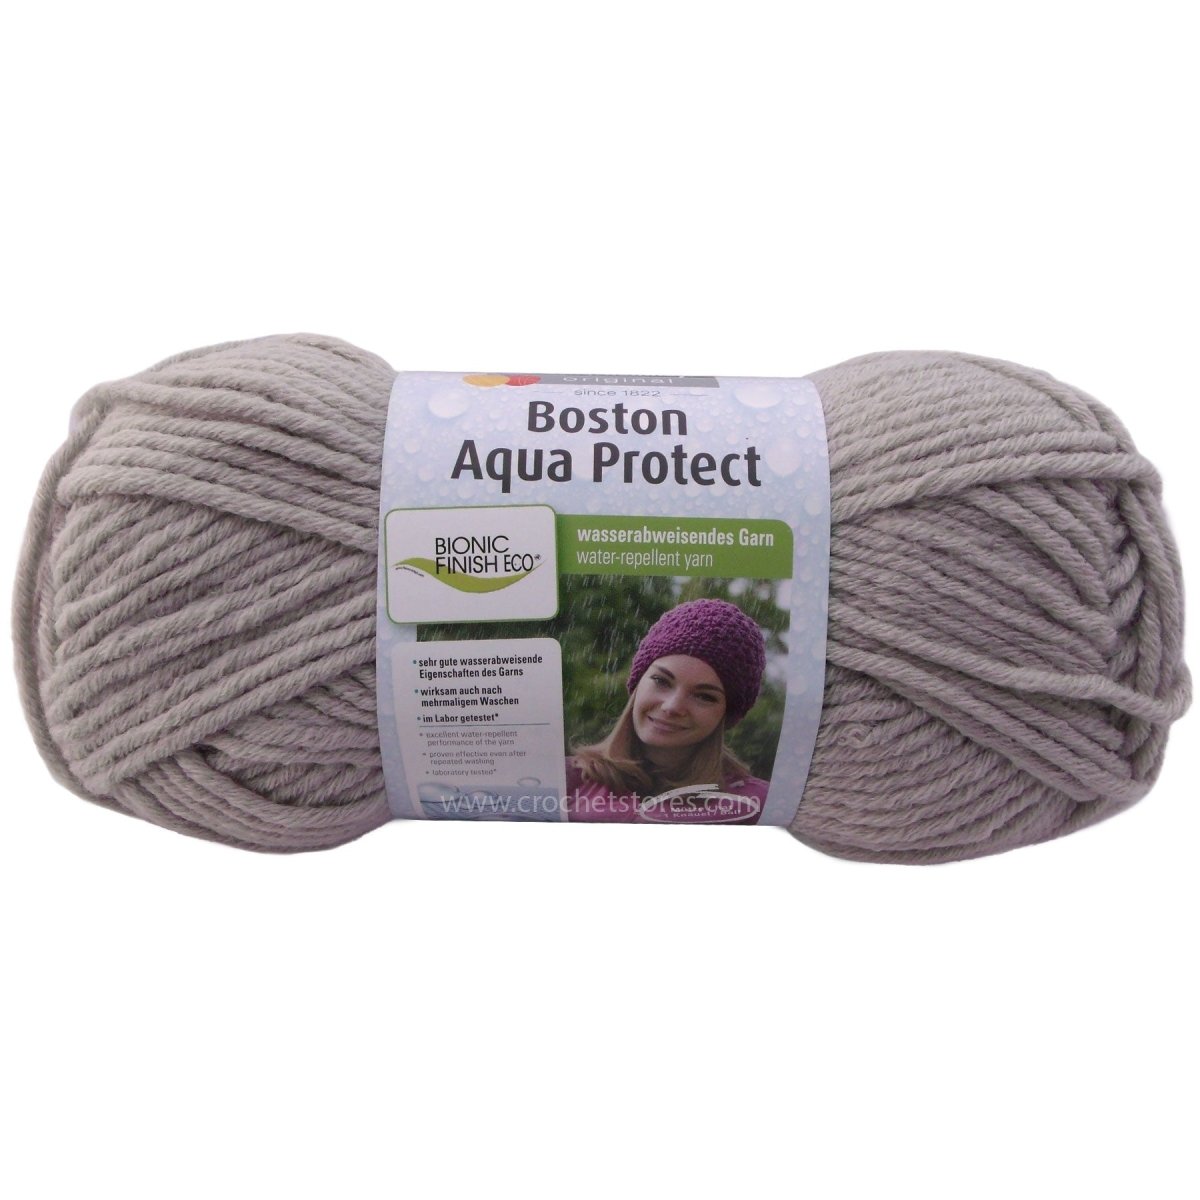 BOSTON AQUA PROTECT - Crochetstores9807791-590